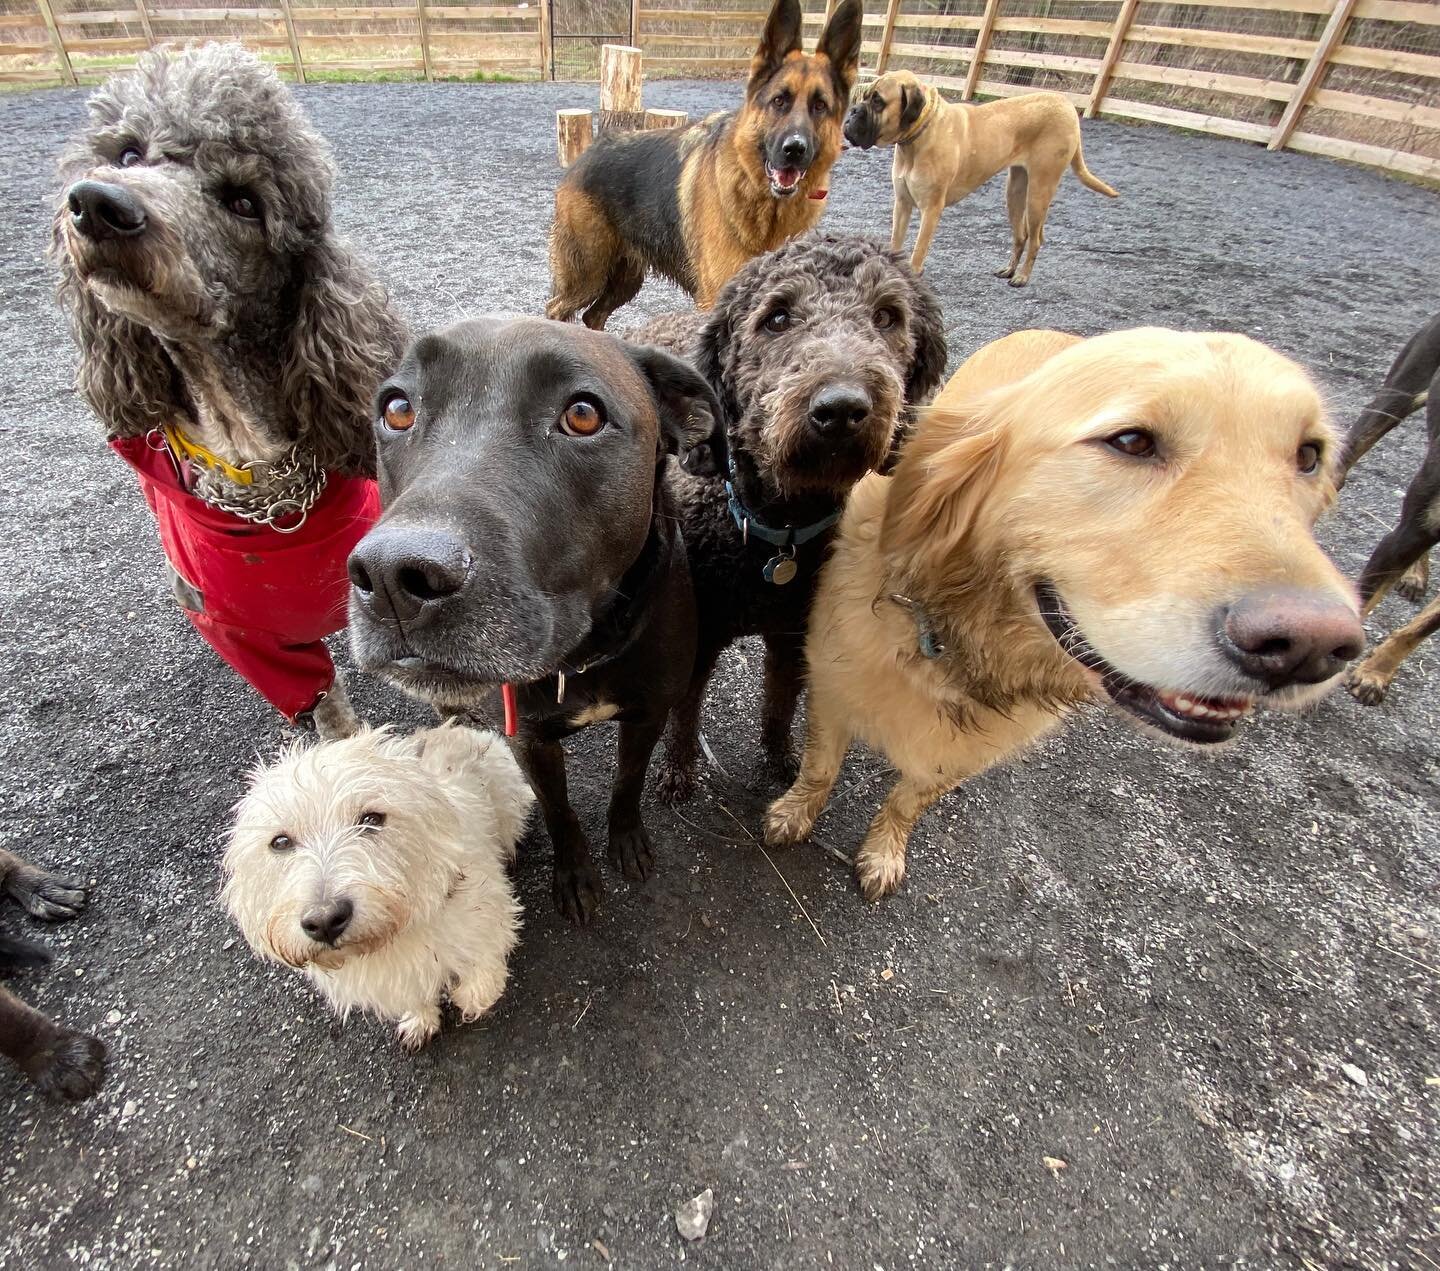 Happy Muddy Friends make for a great Wednesday at the Farm #beafarmdog #farmdogadventures #opbarks #phillydogtraining 

#dogsocialization #dogtraining #offleashadventures #offleashdogs #dogpack #phillydog #dogsofphilly